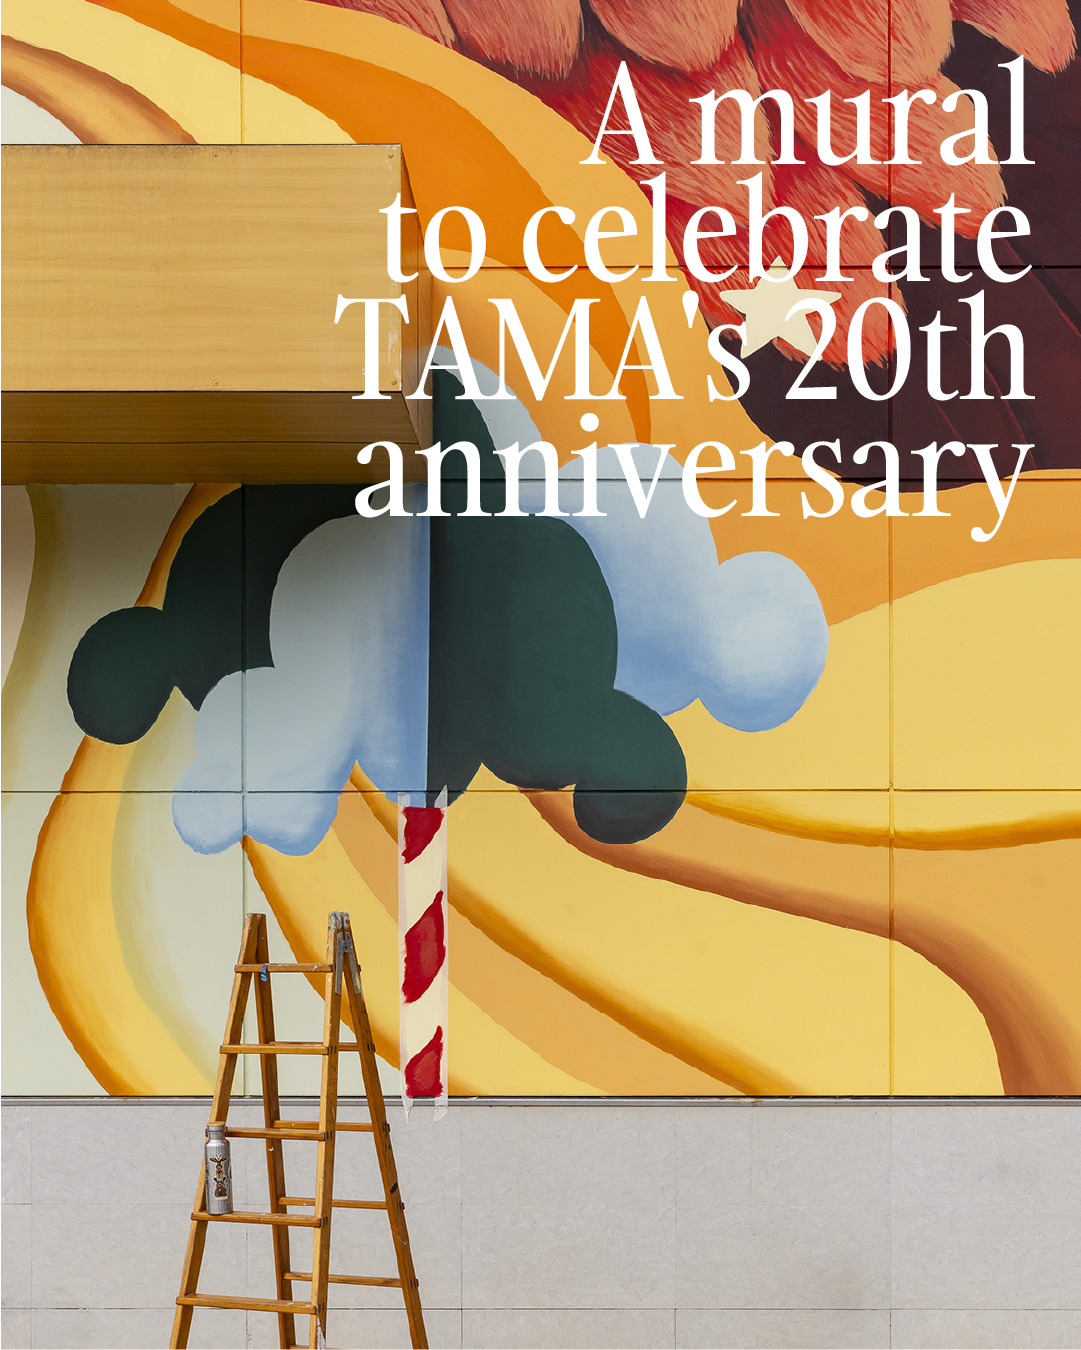 PRESS_Dulk’s mural to celebrate TAMA’s 20th anniversary